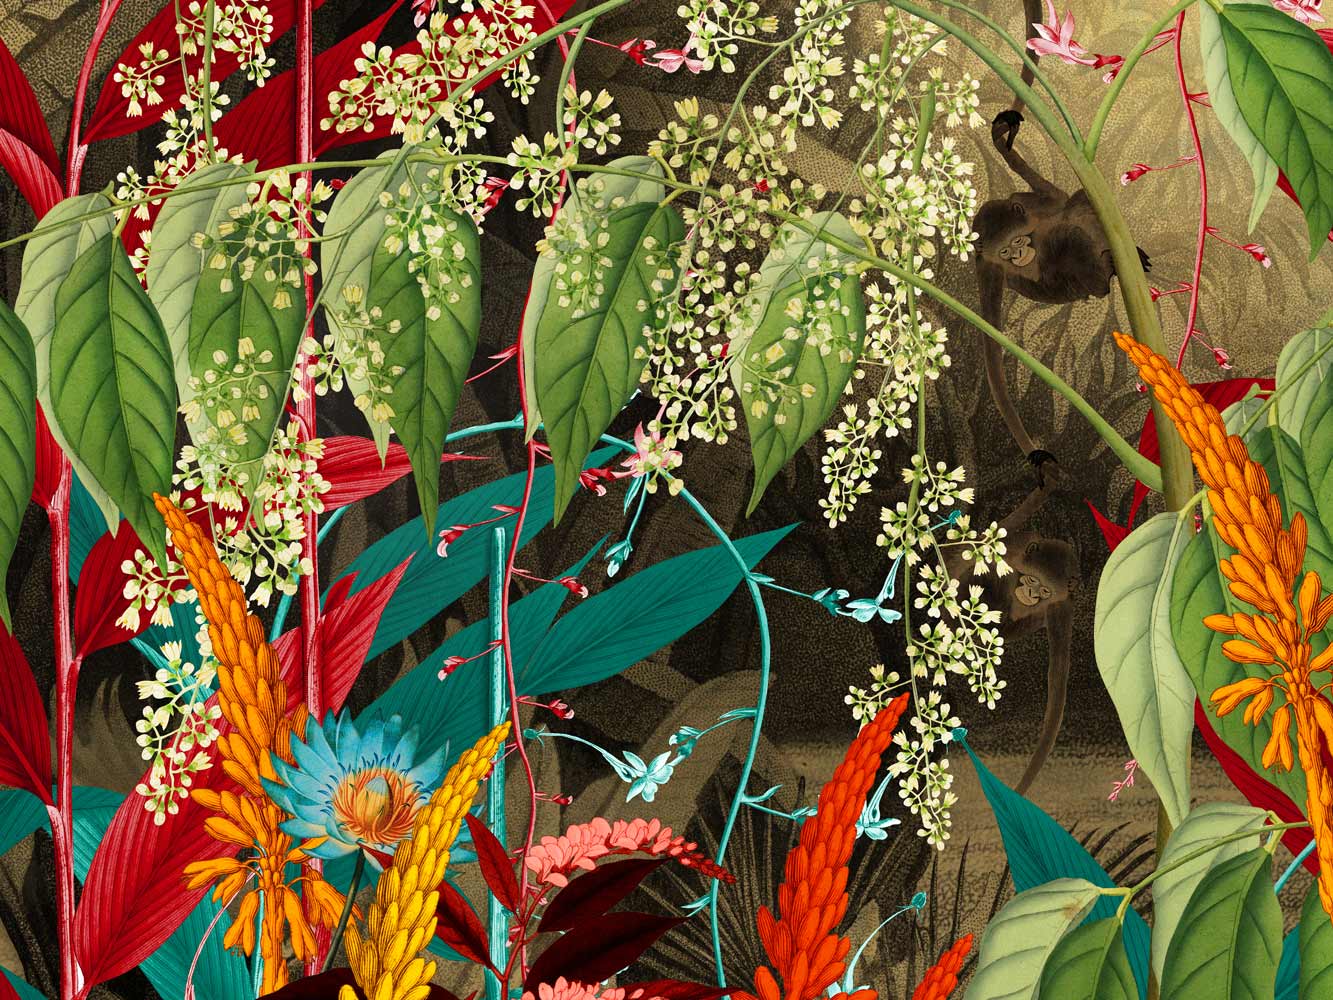 Hot tropics design showcasing the botanicals and exotic landscape